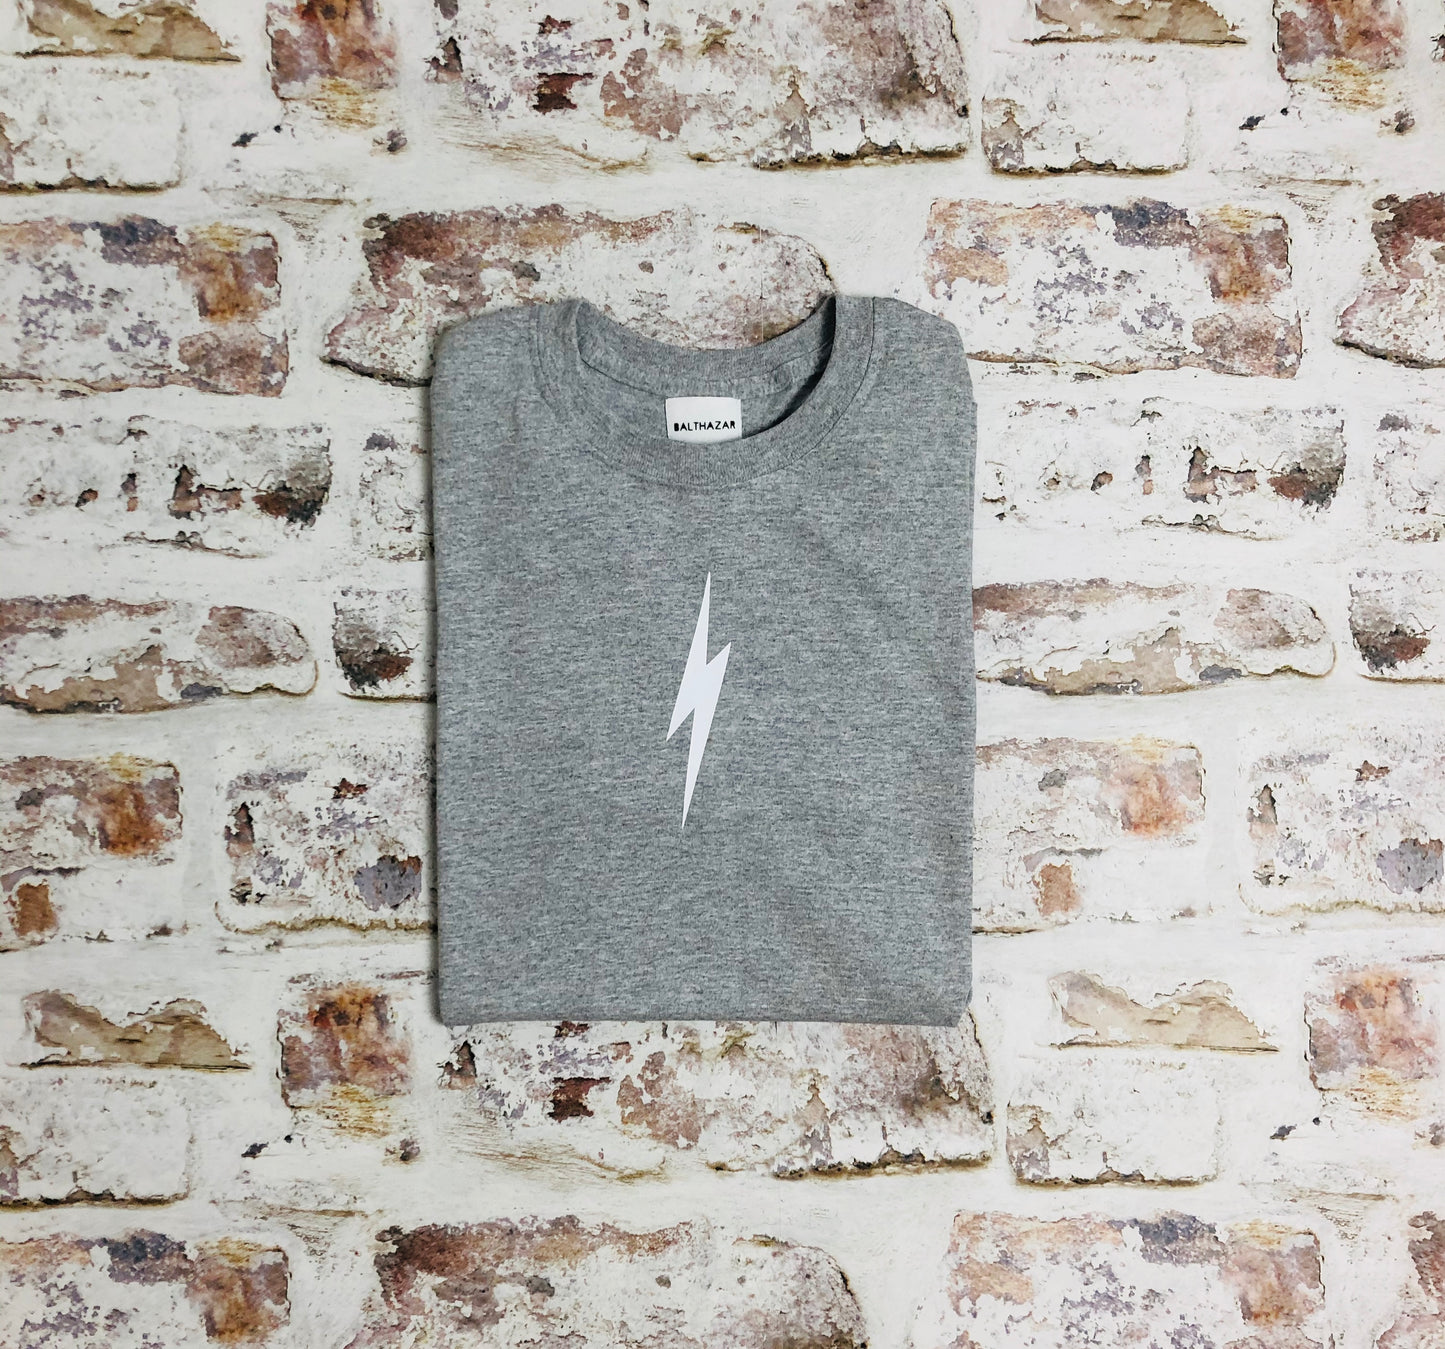 Monochrome lightning bolt t-shirt - Unisex style